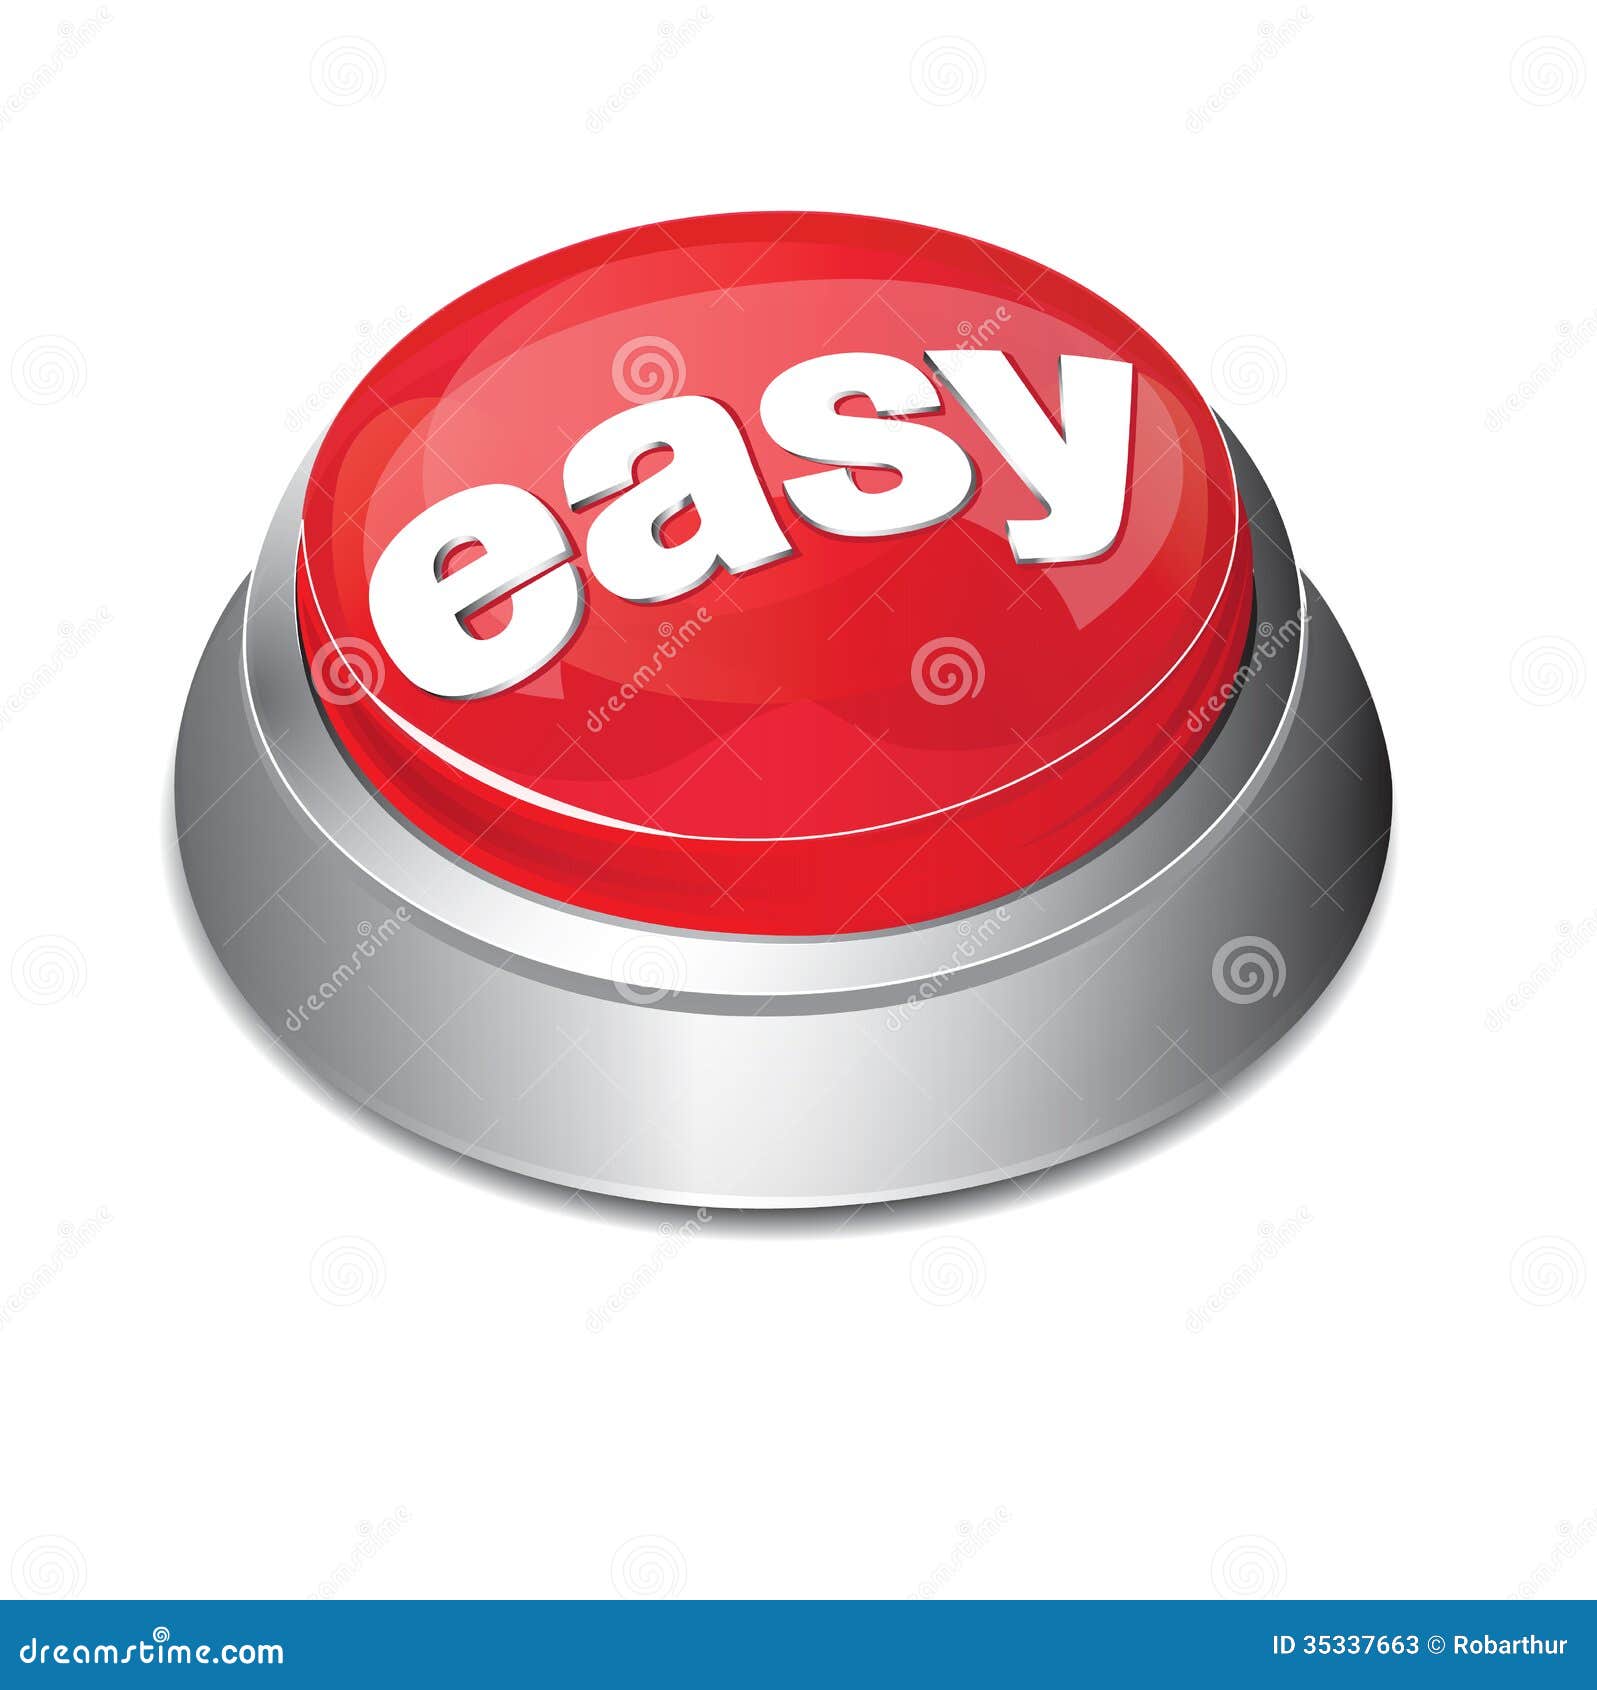 press the easy button